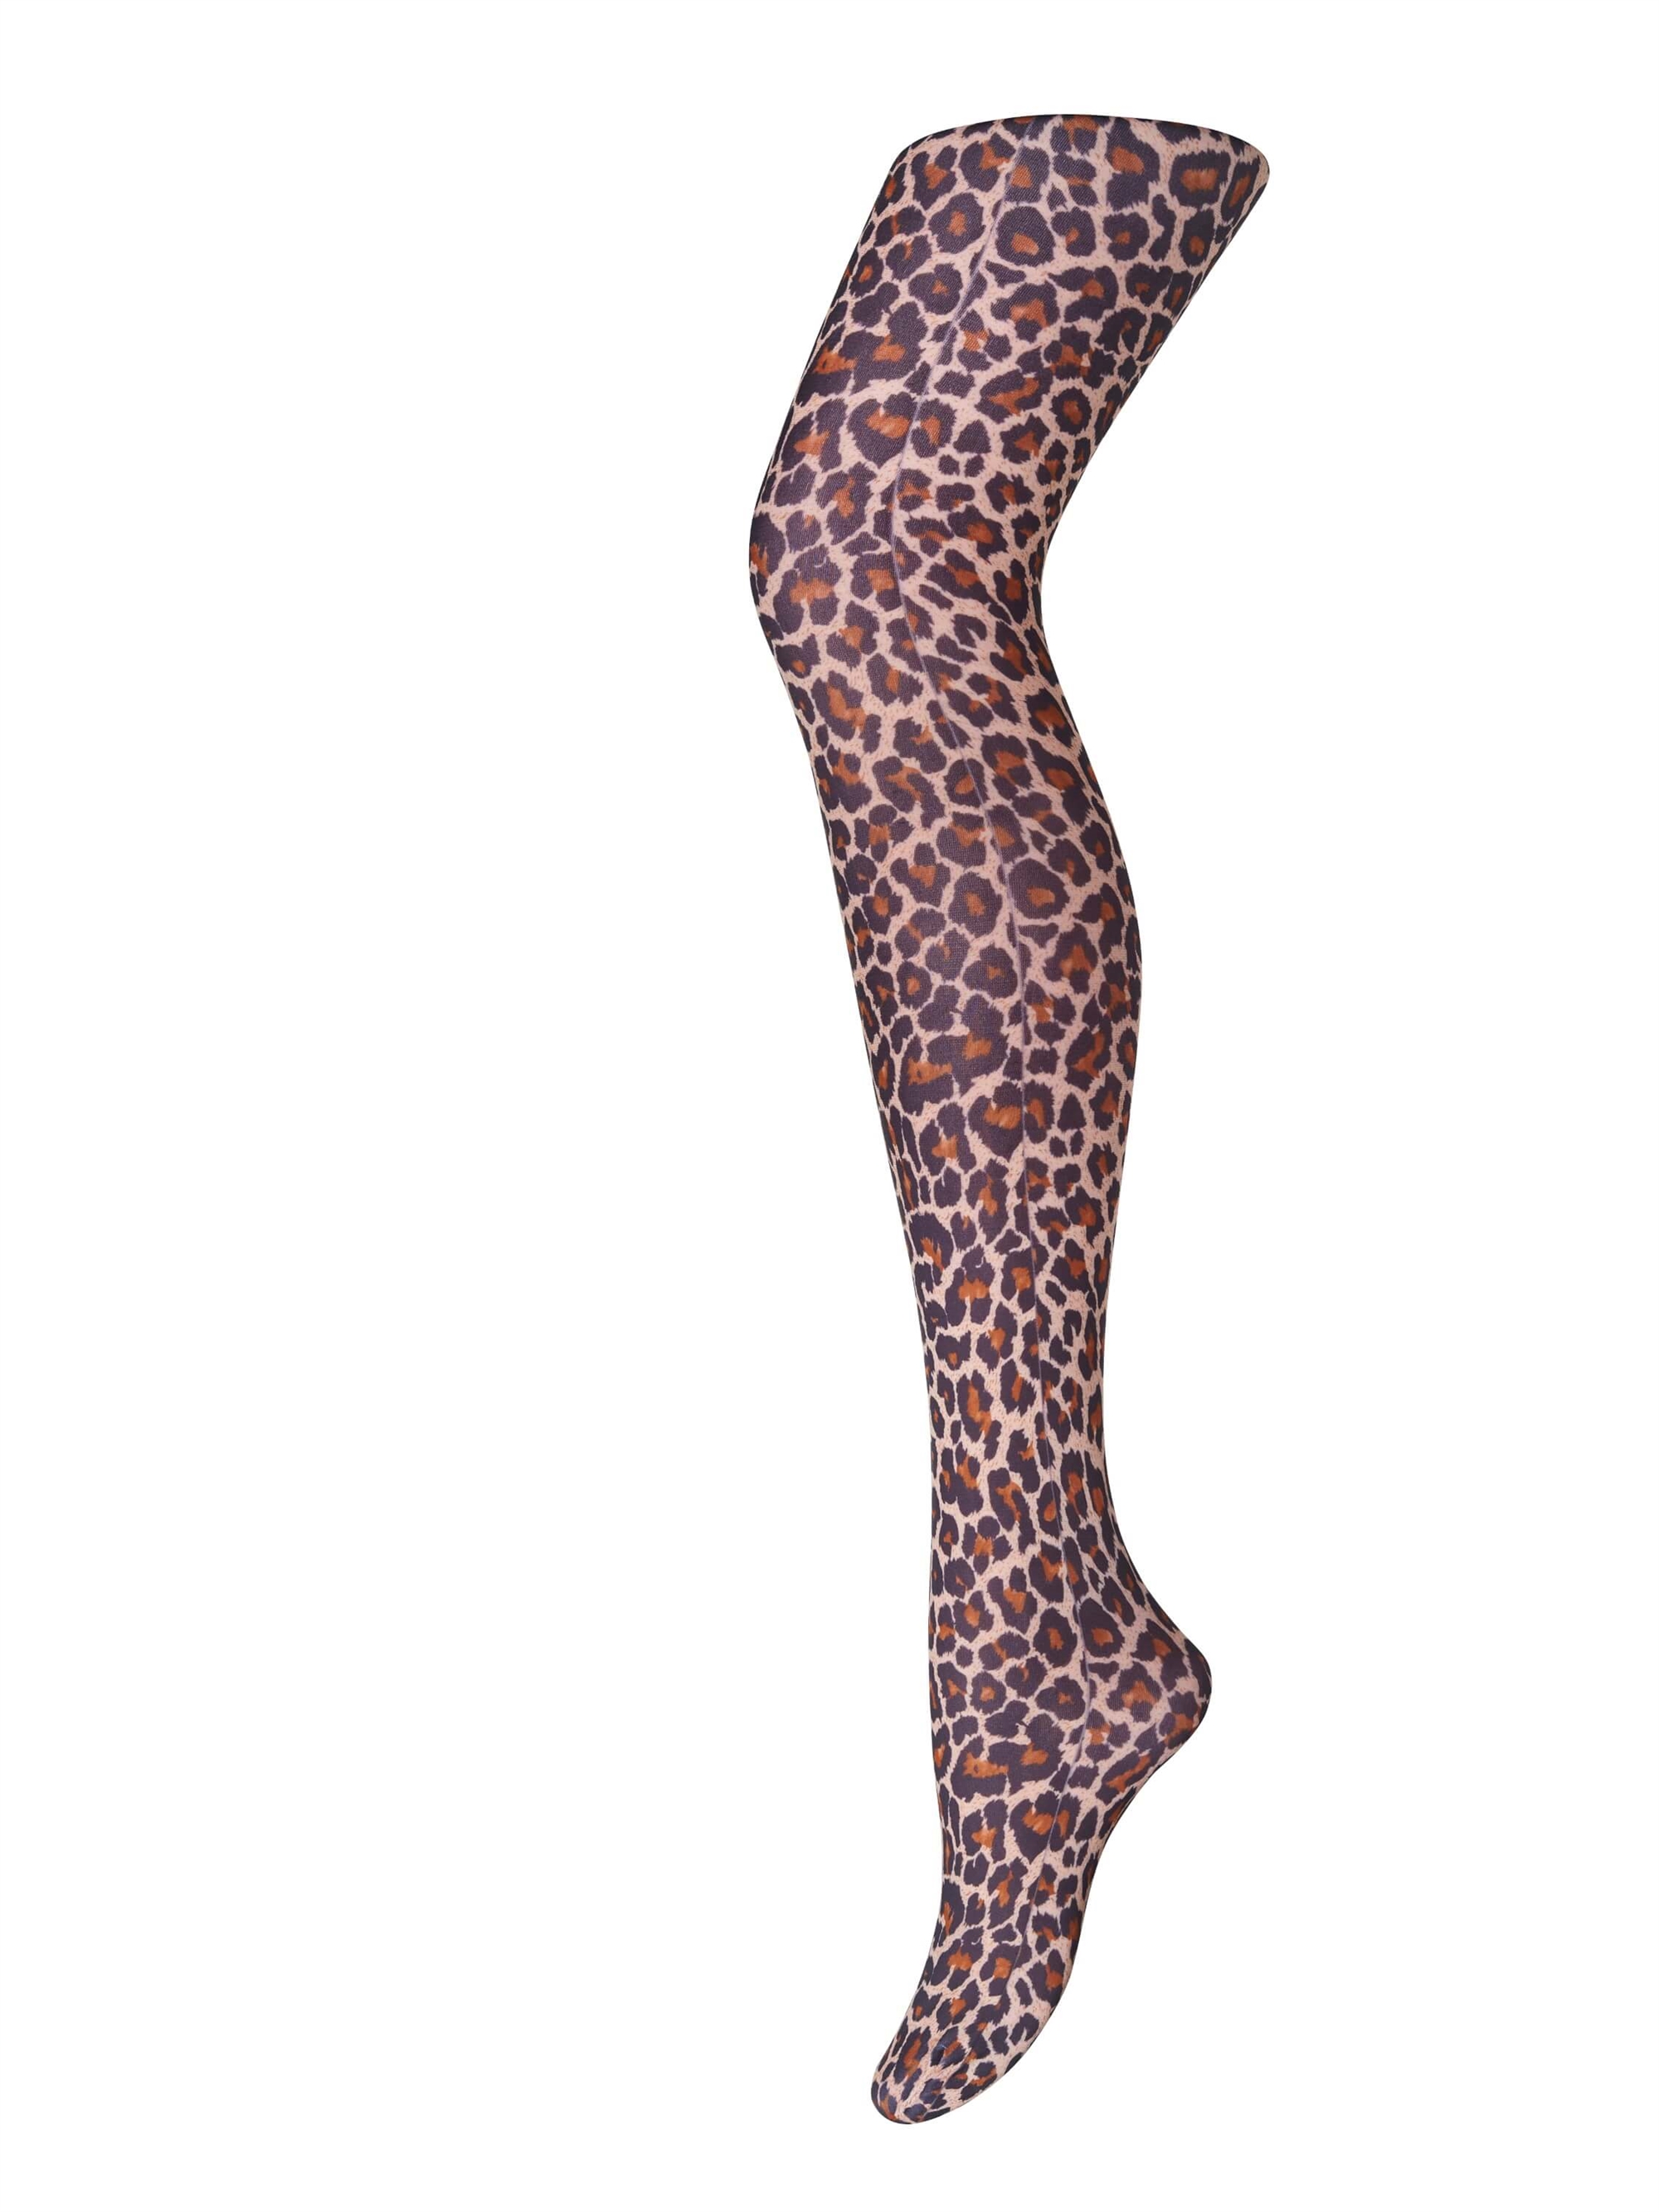 EUR Strumpfhose - Print Fox Leopard Sneaky 26,50